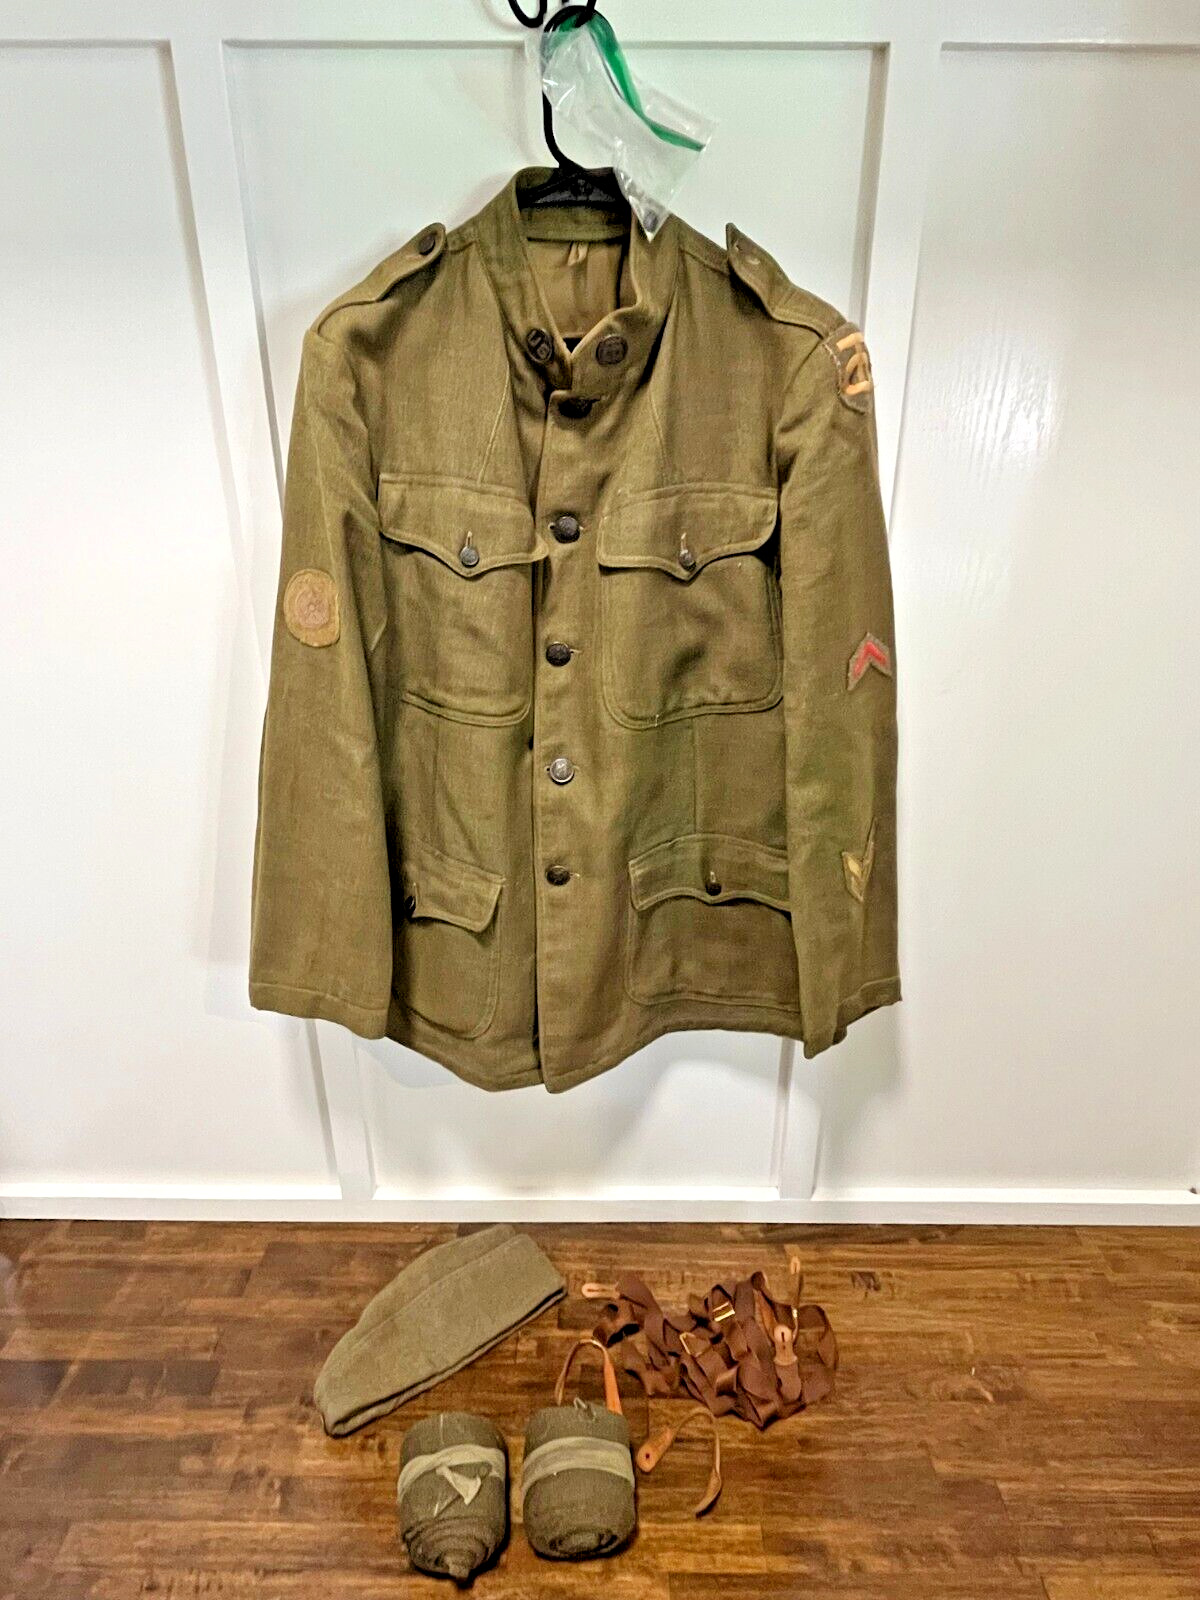 Rare Original WWI U.S. Army Wagoner Tunic Uniform Jacket & Accessories - ca.1918